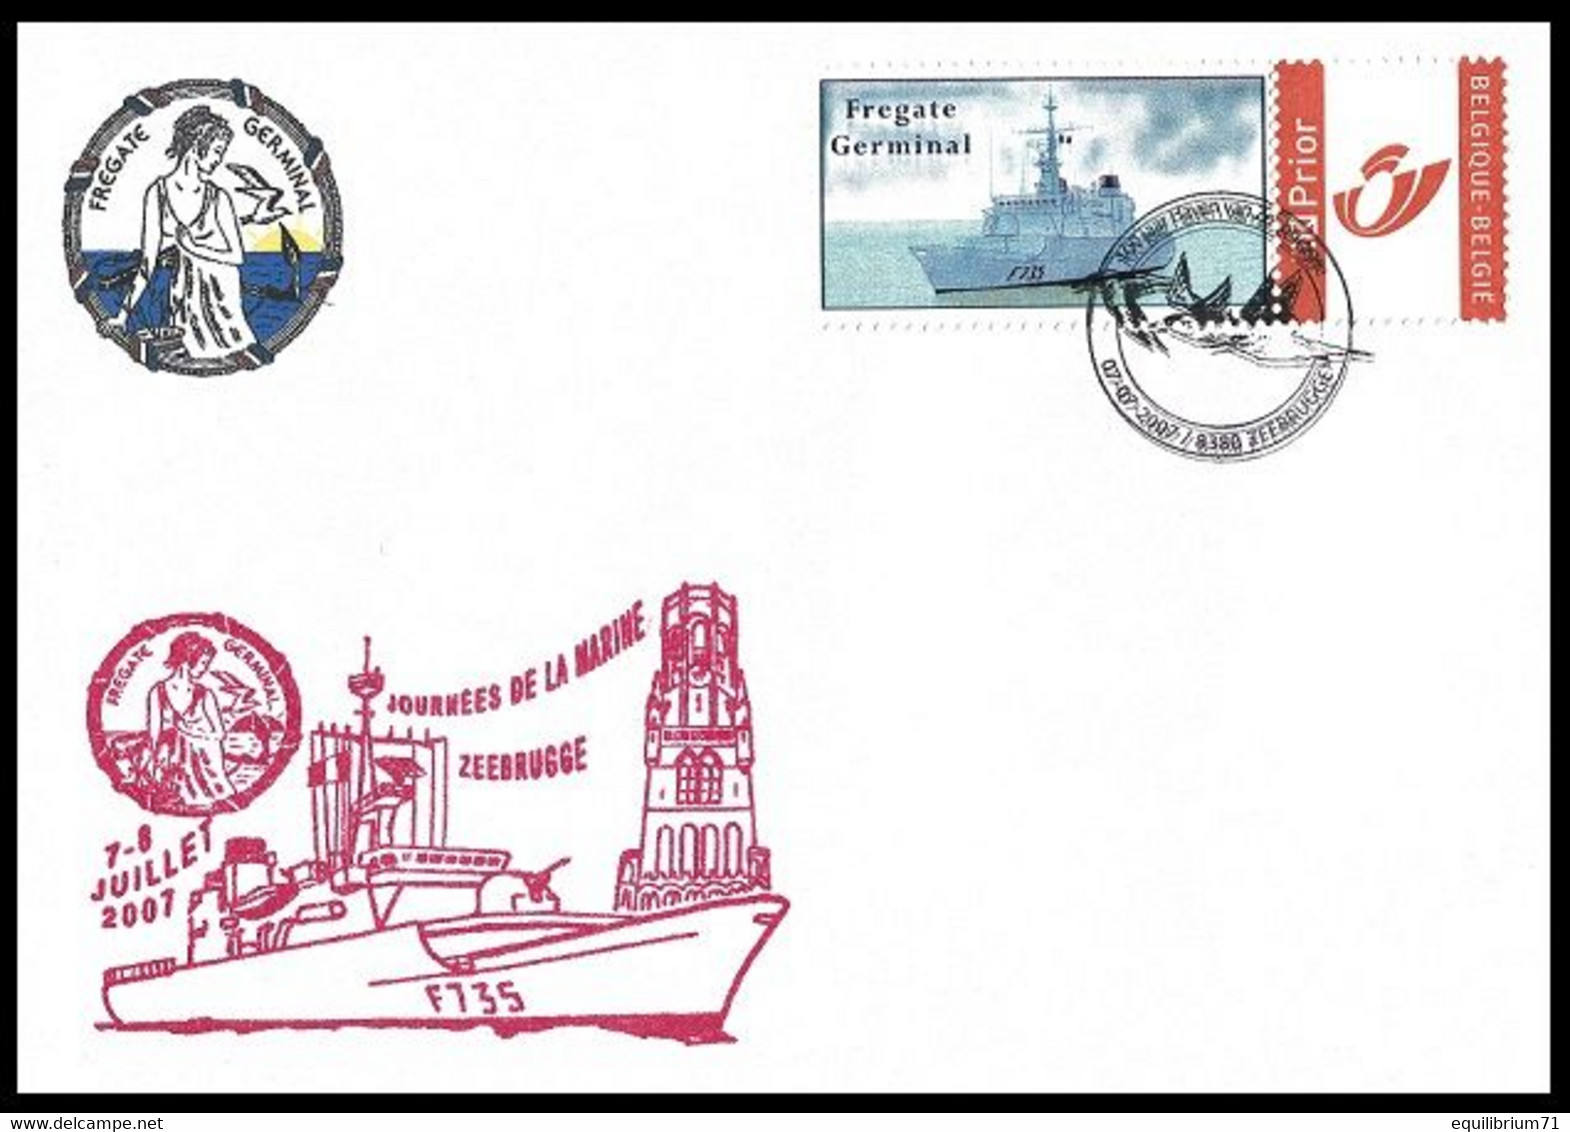 Enveloppe Souvenir/Herdenkingsomslag° - Journée De La Marine/Vlootdagen - 7 & 8 / Juillet/2007 - Frégate Germinal F735 - Briefe U. Dokumente